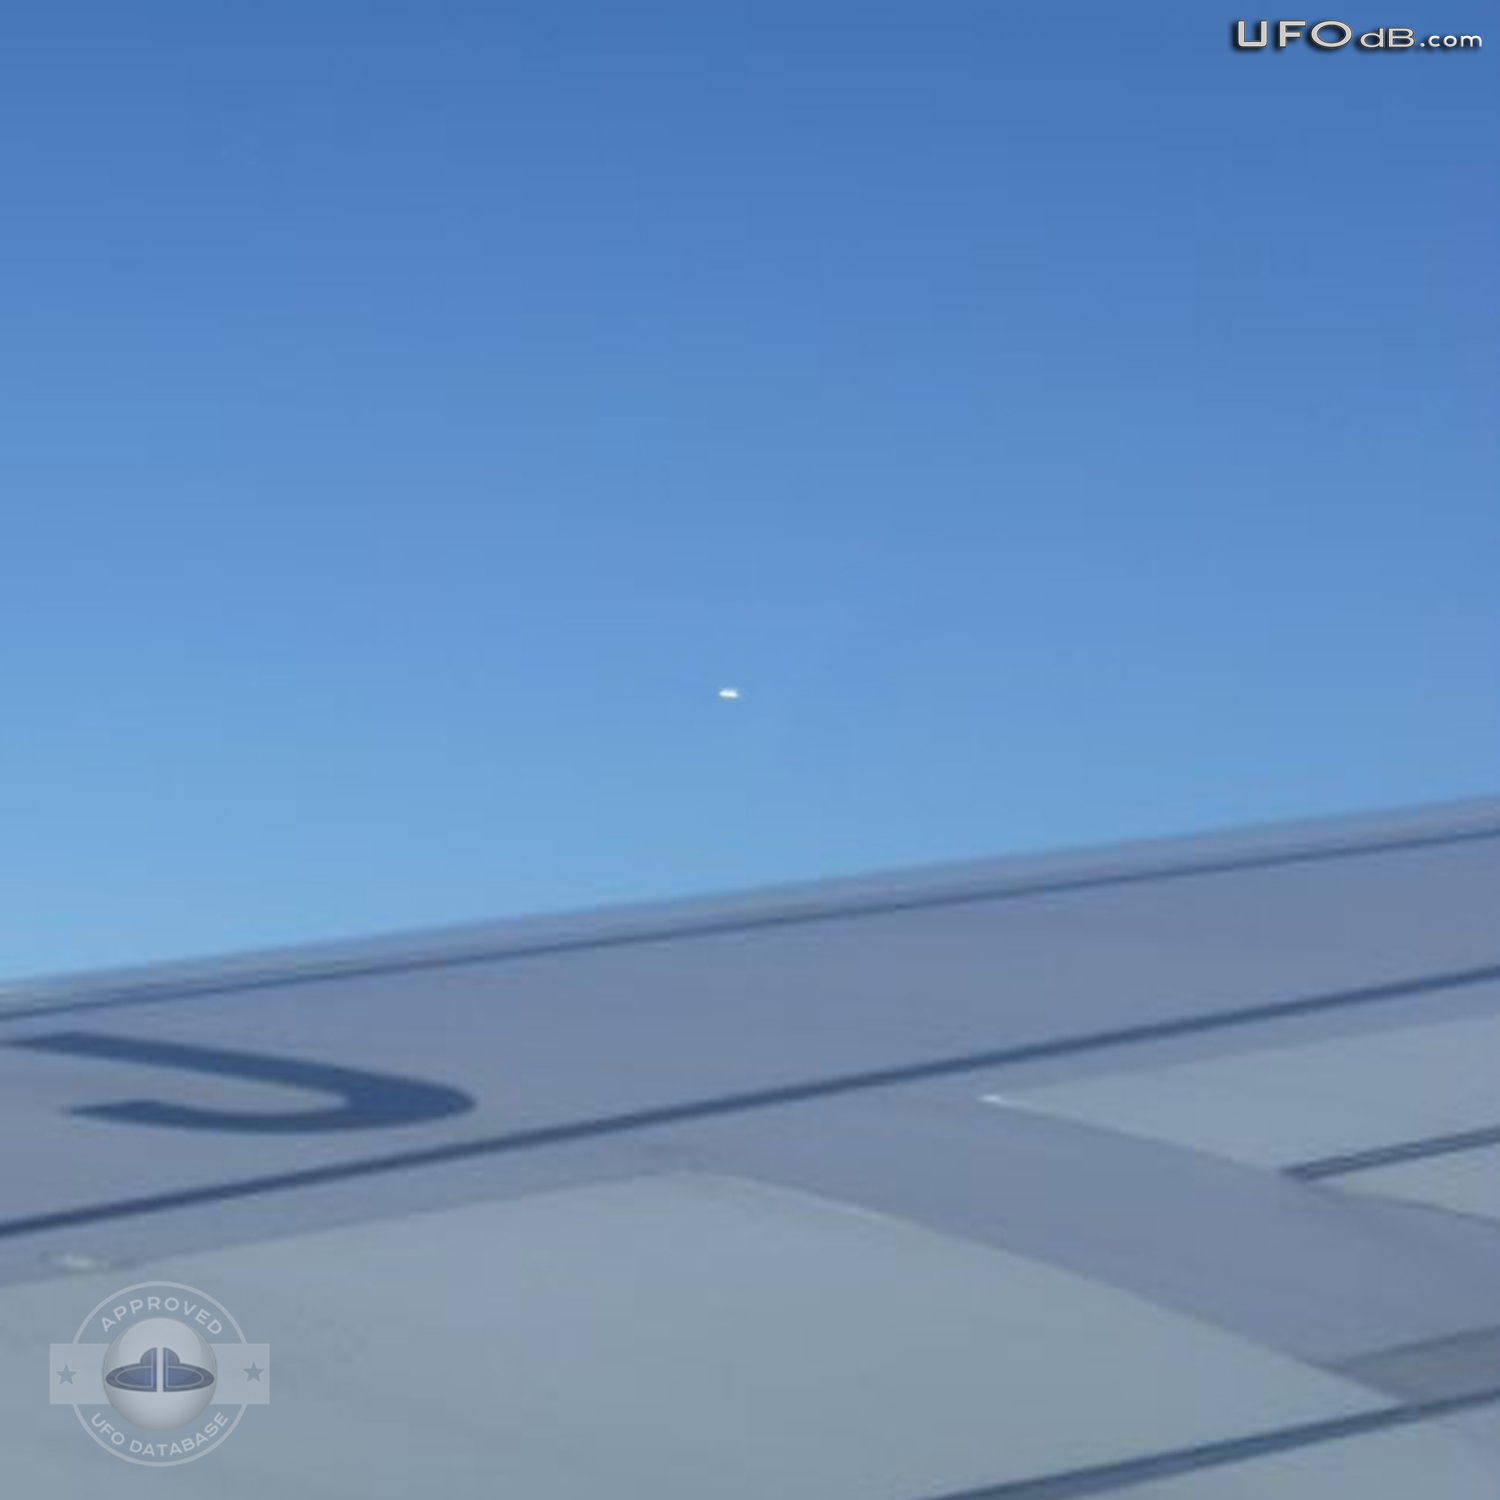 TACA passenger get UFO picture during flight over Peru | June 18 2010 UFO Picture #317-2